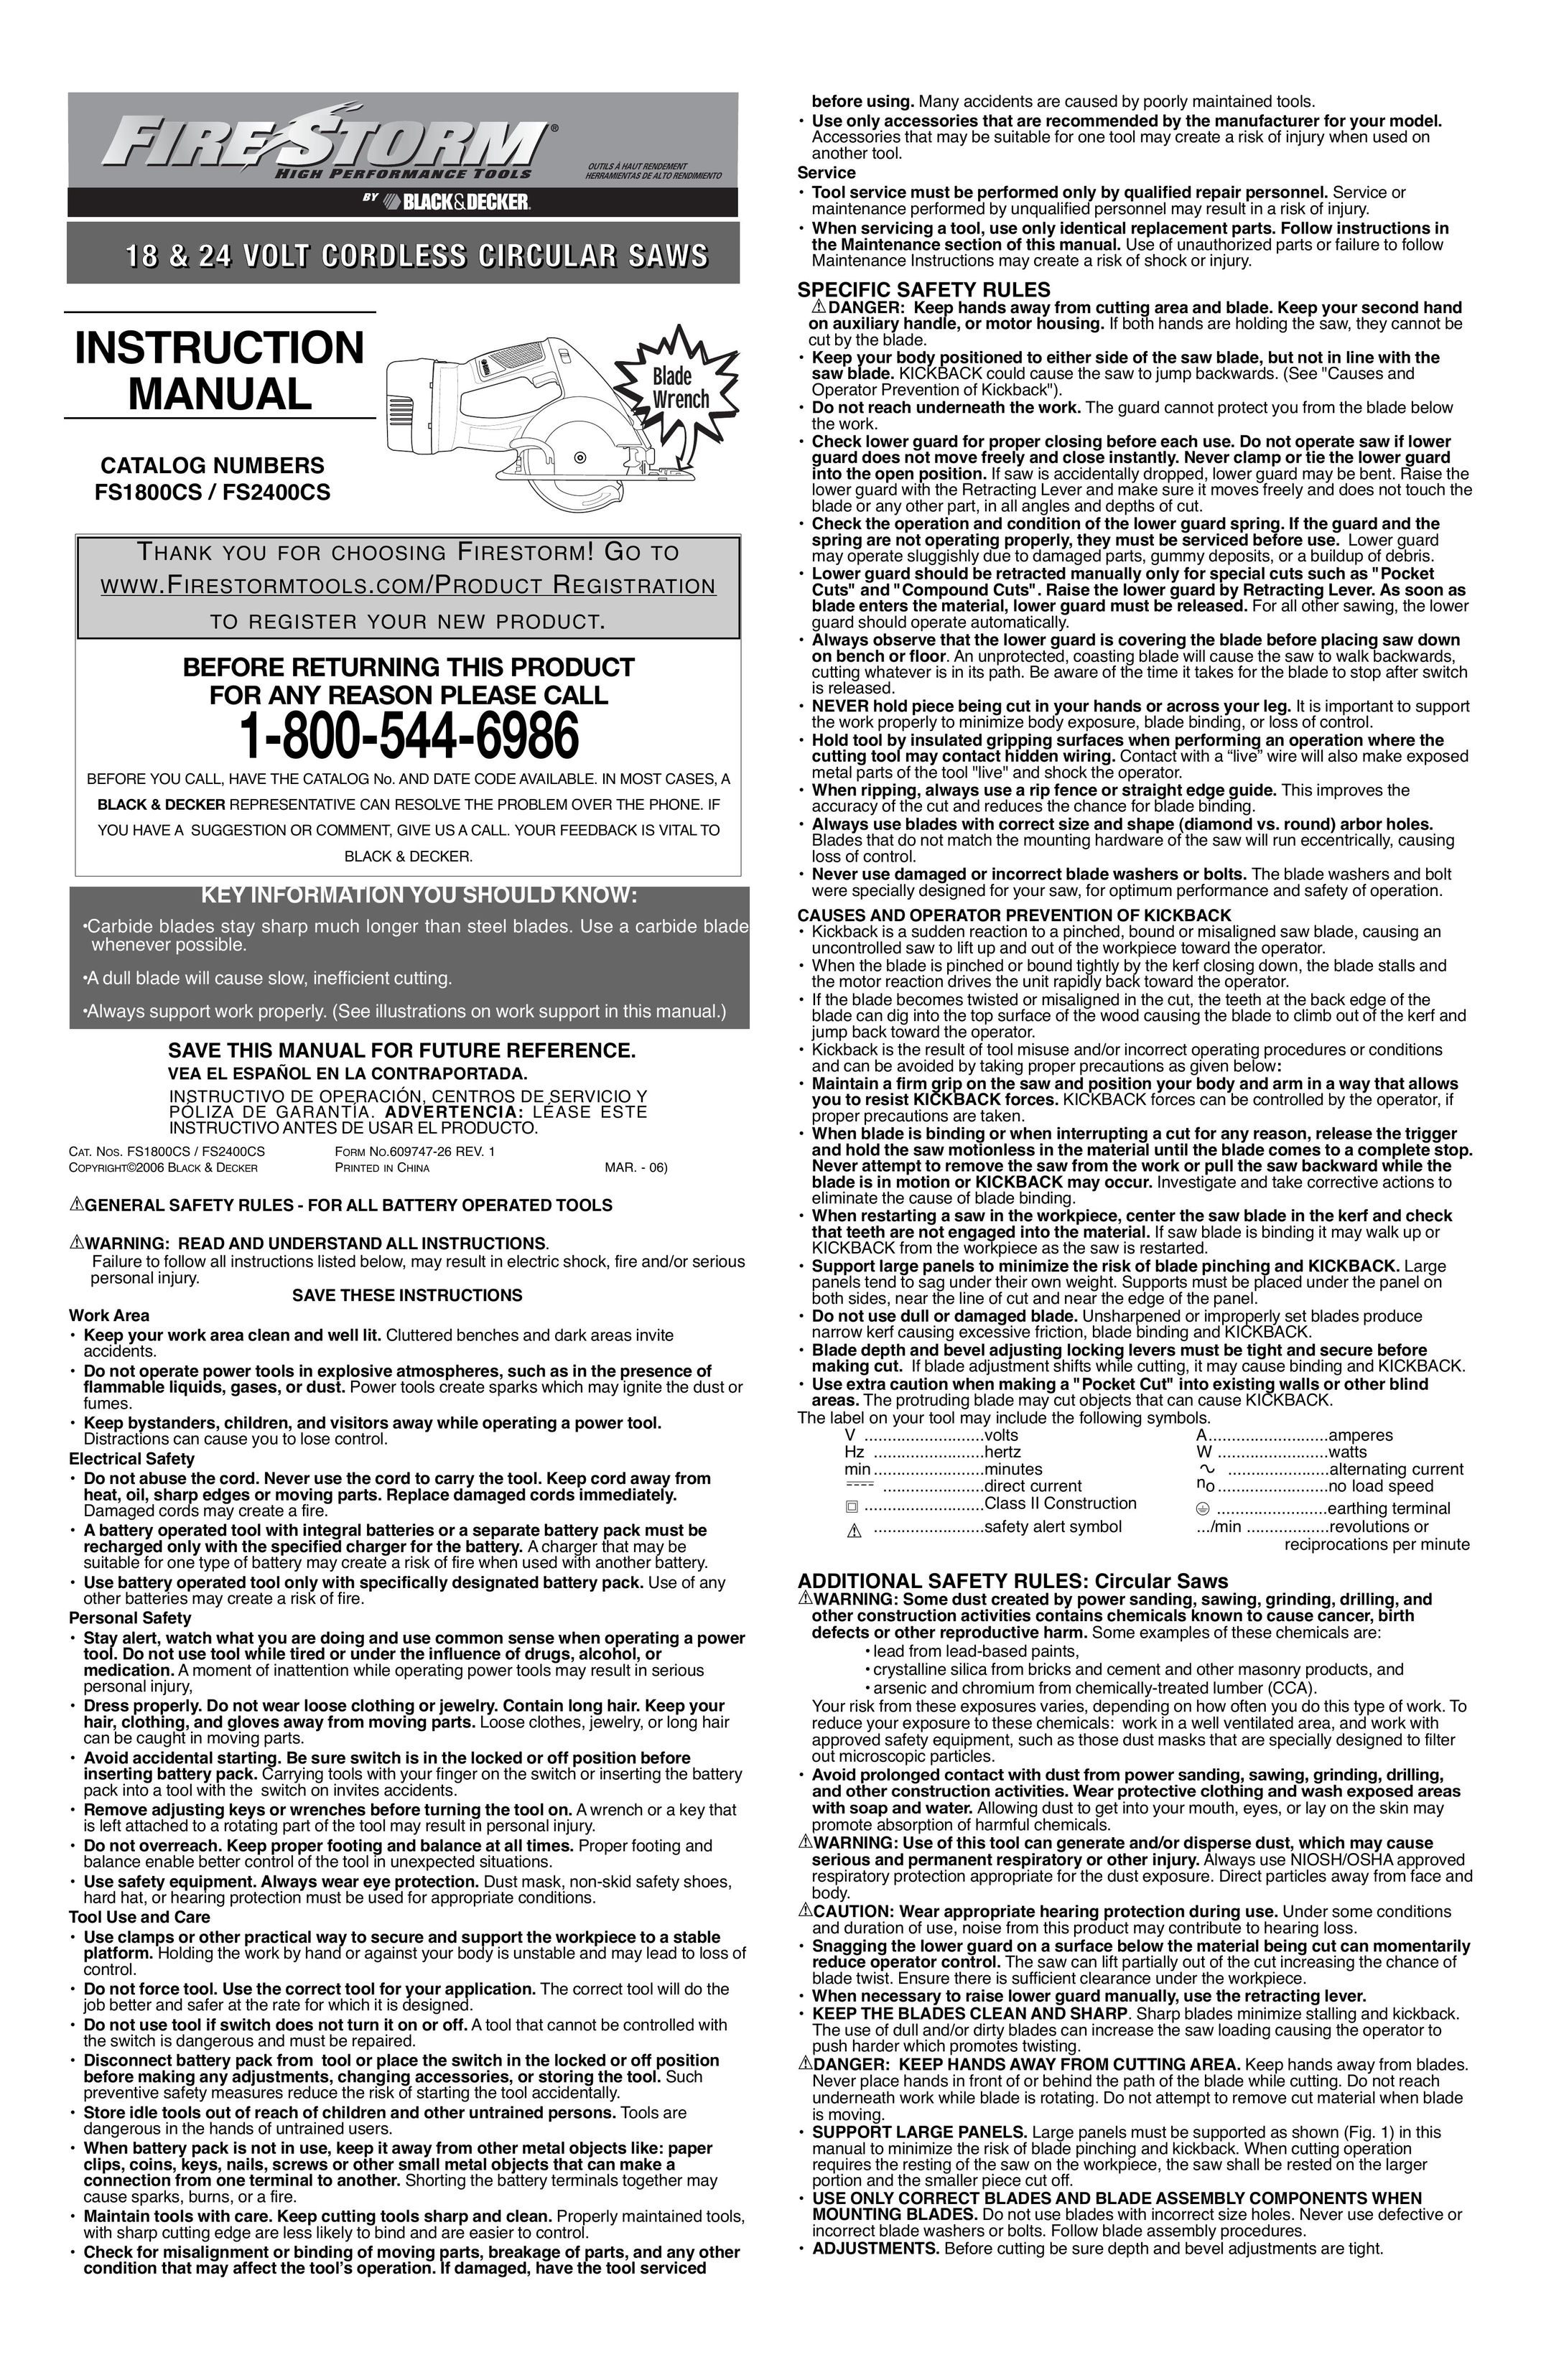 Black & Decker 609747-26 Cordless Saw User Manual